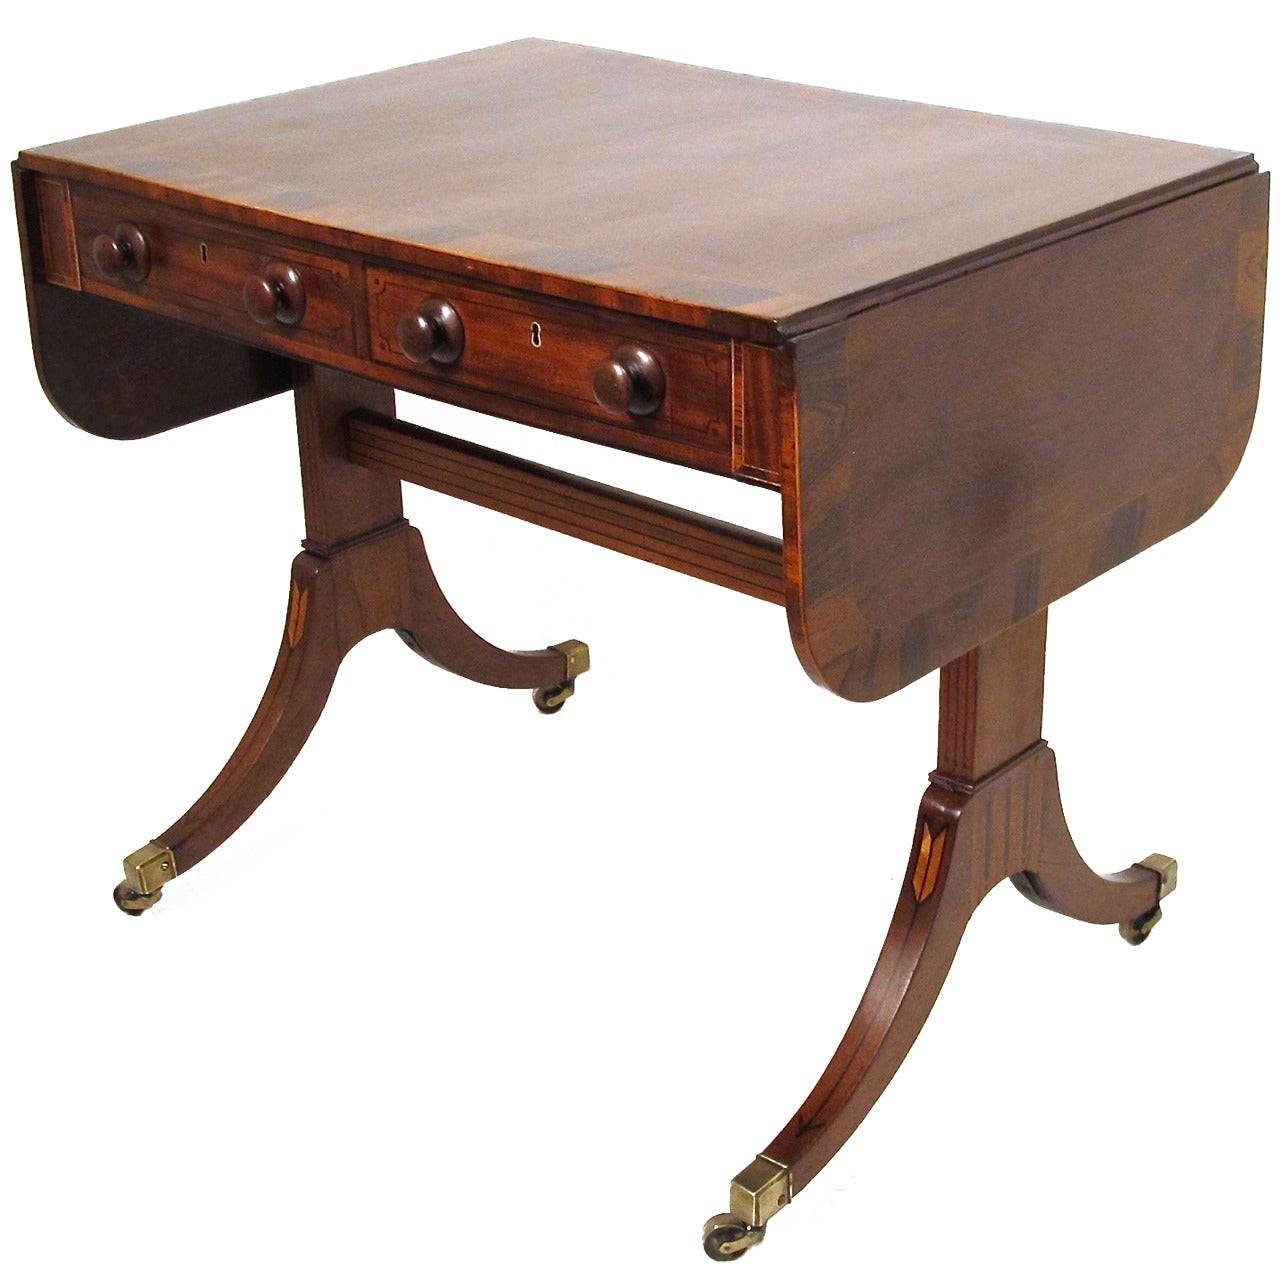  Early 19th c. English Regency Sofa Table